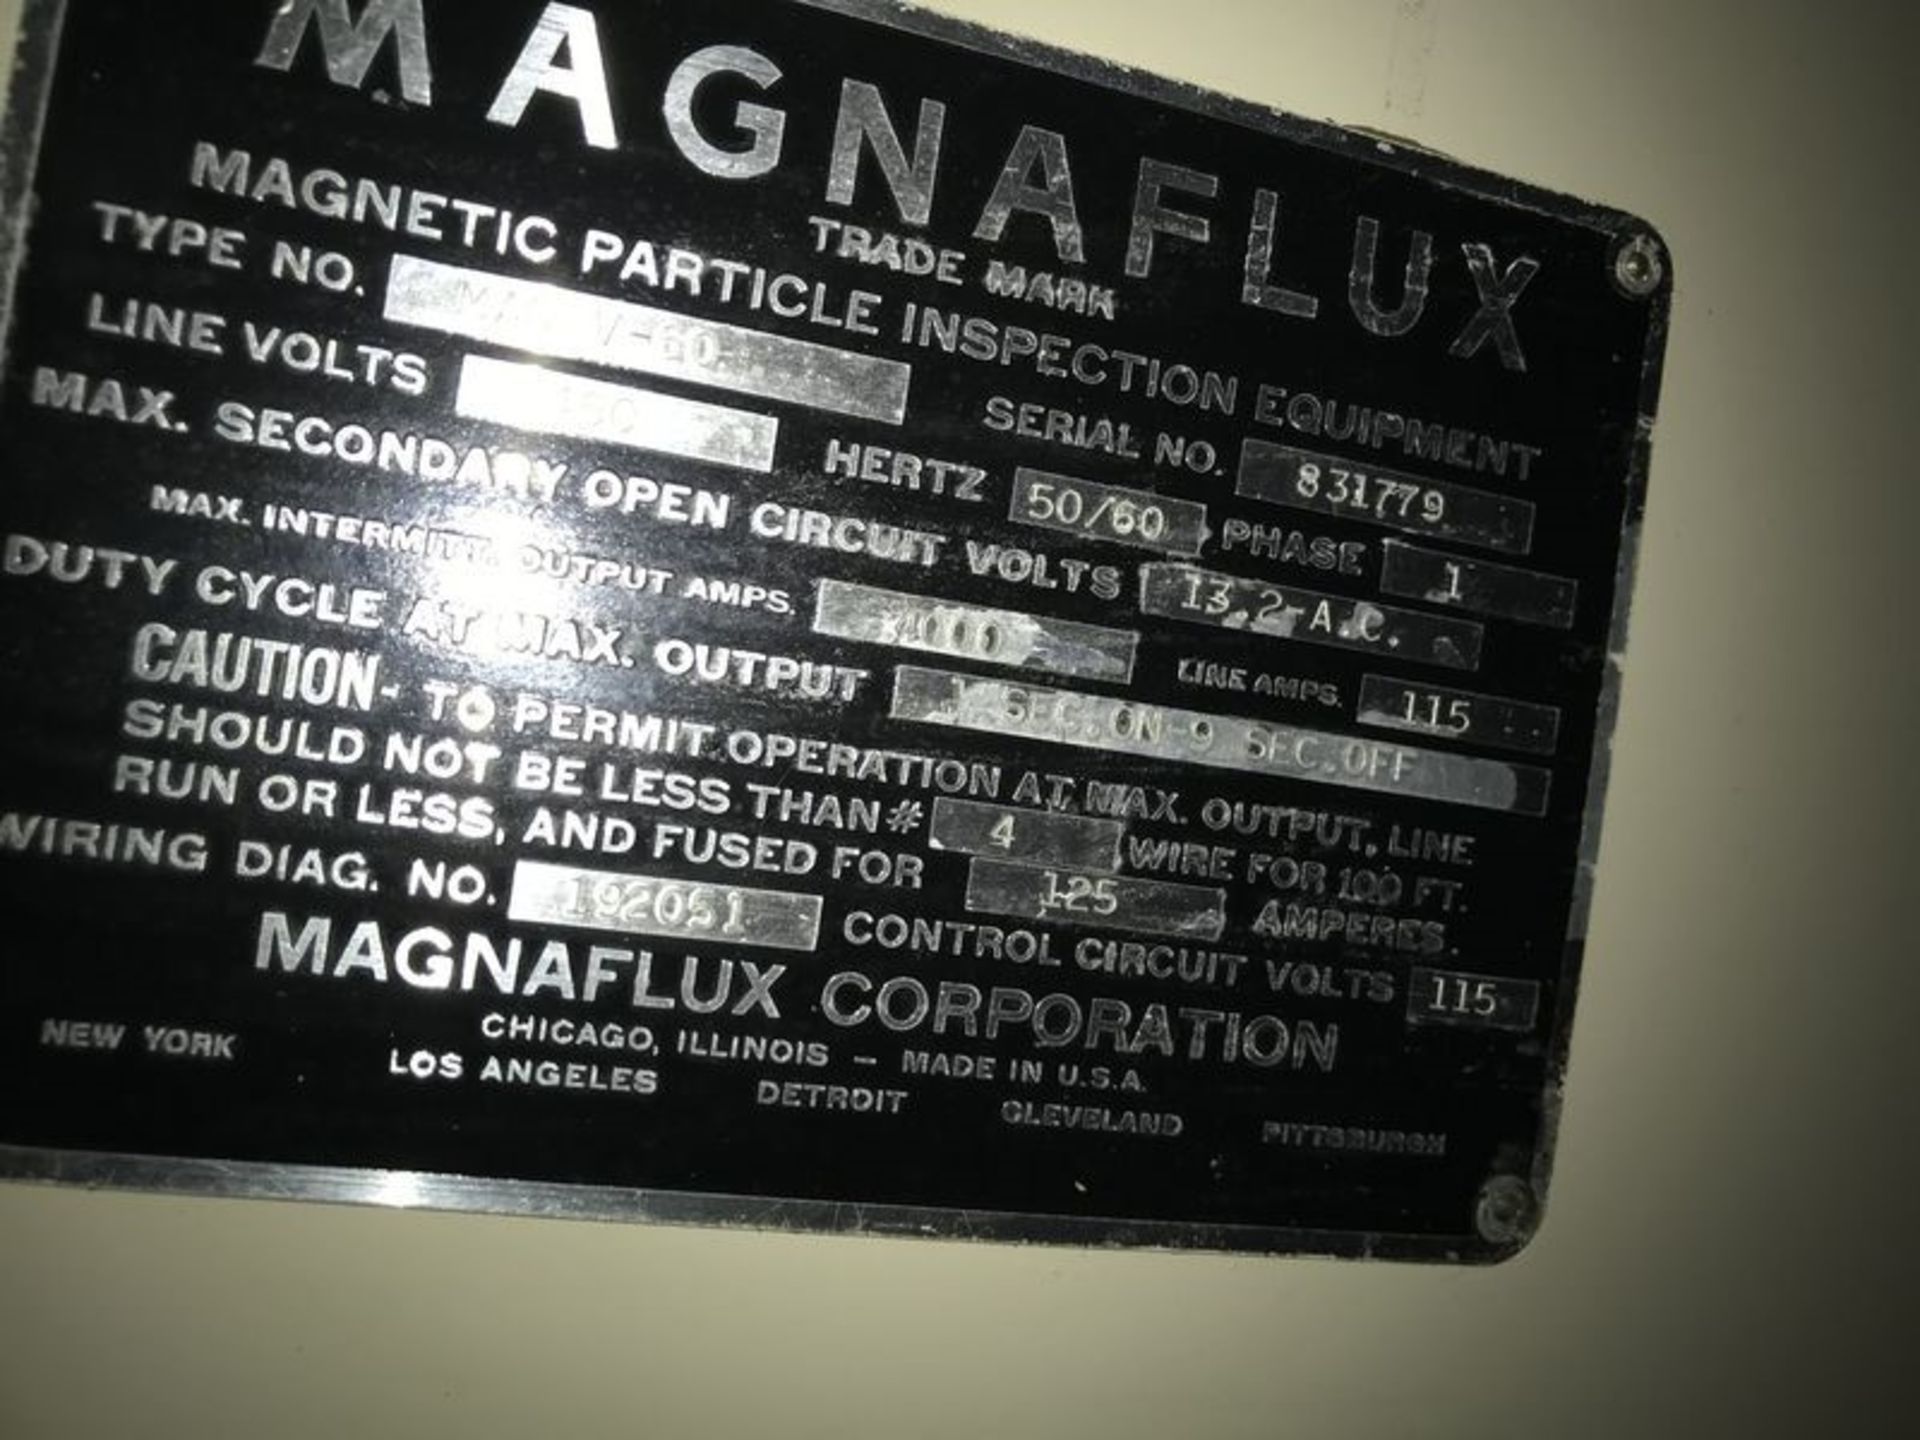 Magnaflux Magnetic Particle Inspection System, 115V, single phase. SN# 831779. Shop Area. Asset - Image 6 of 6